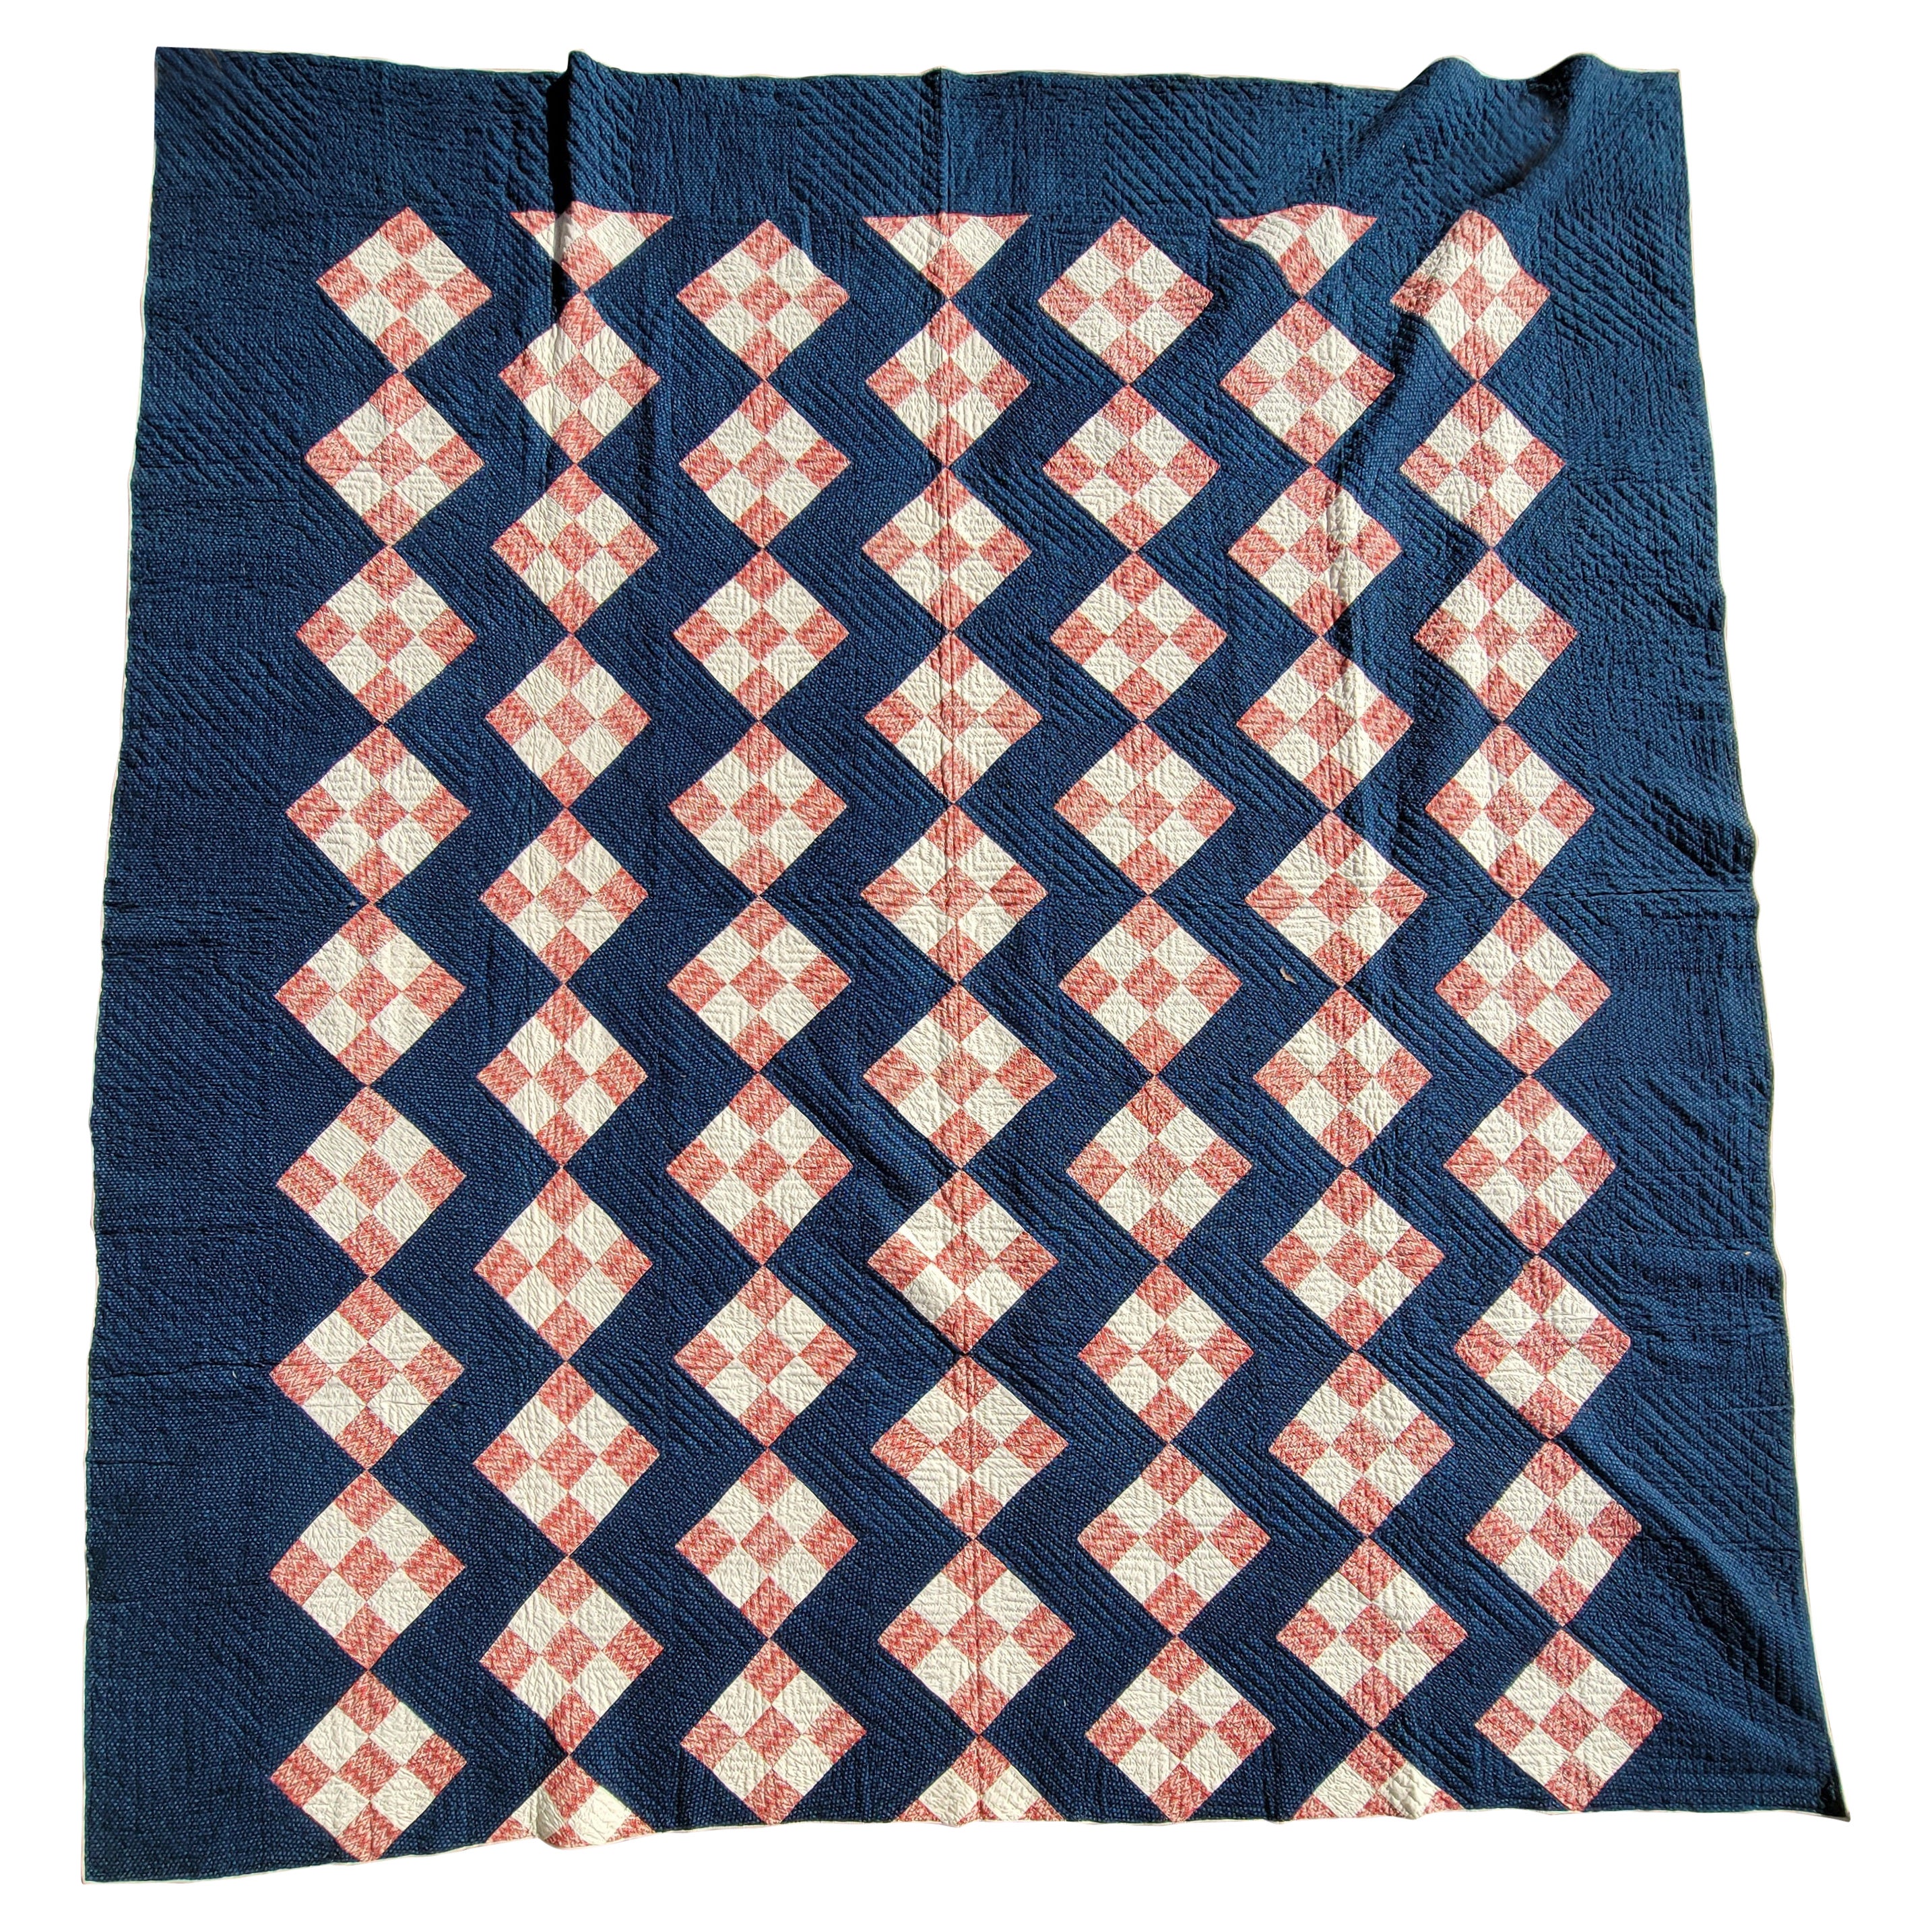 Courtepointe du 19ème siècle Early Nine Patch avec couture de fond bleu indigo